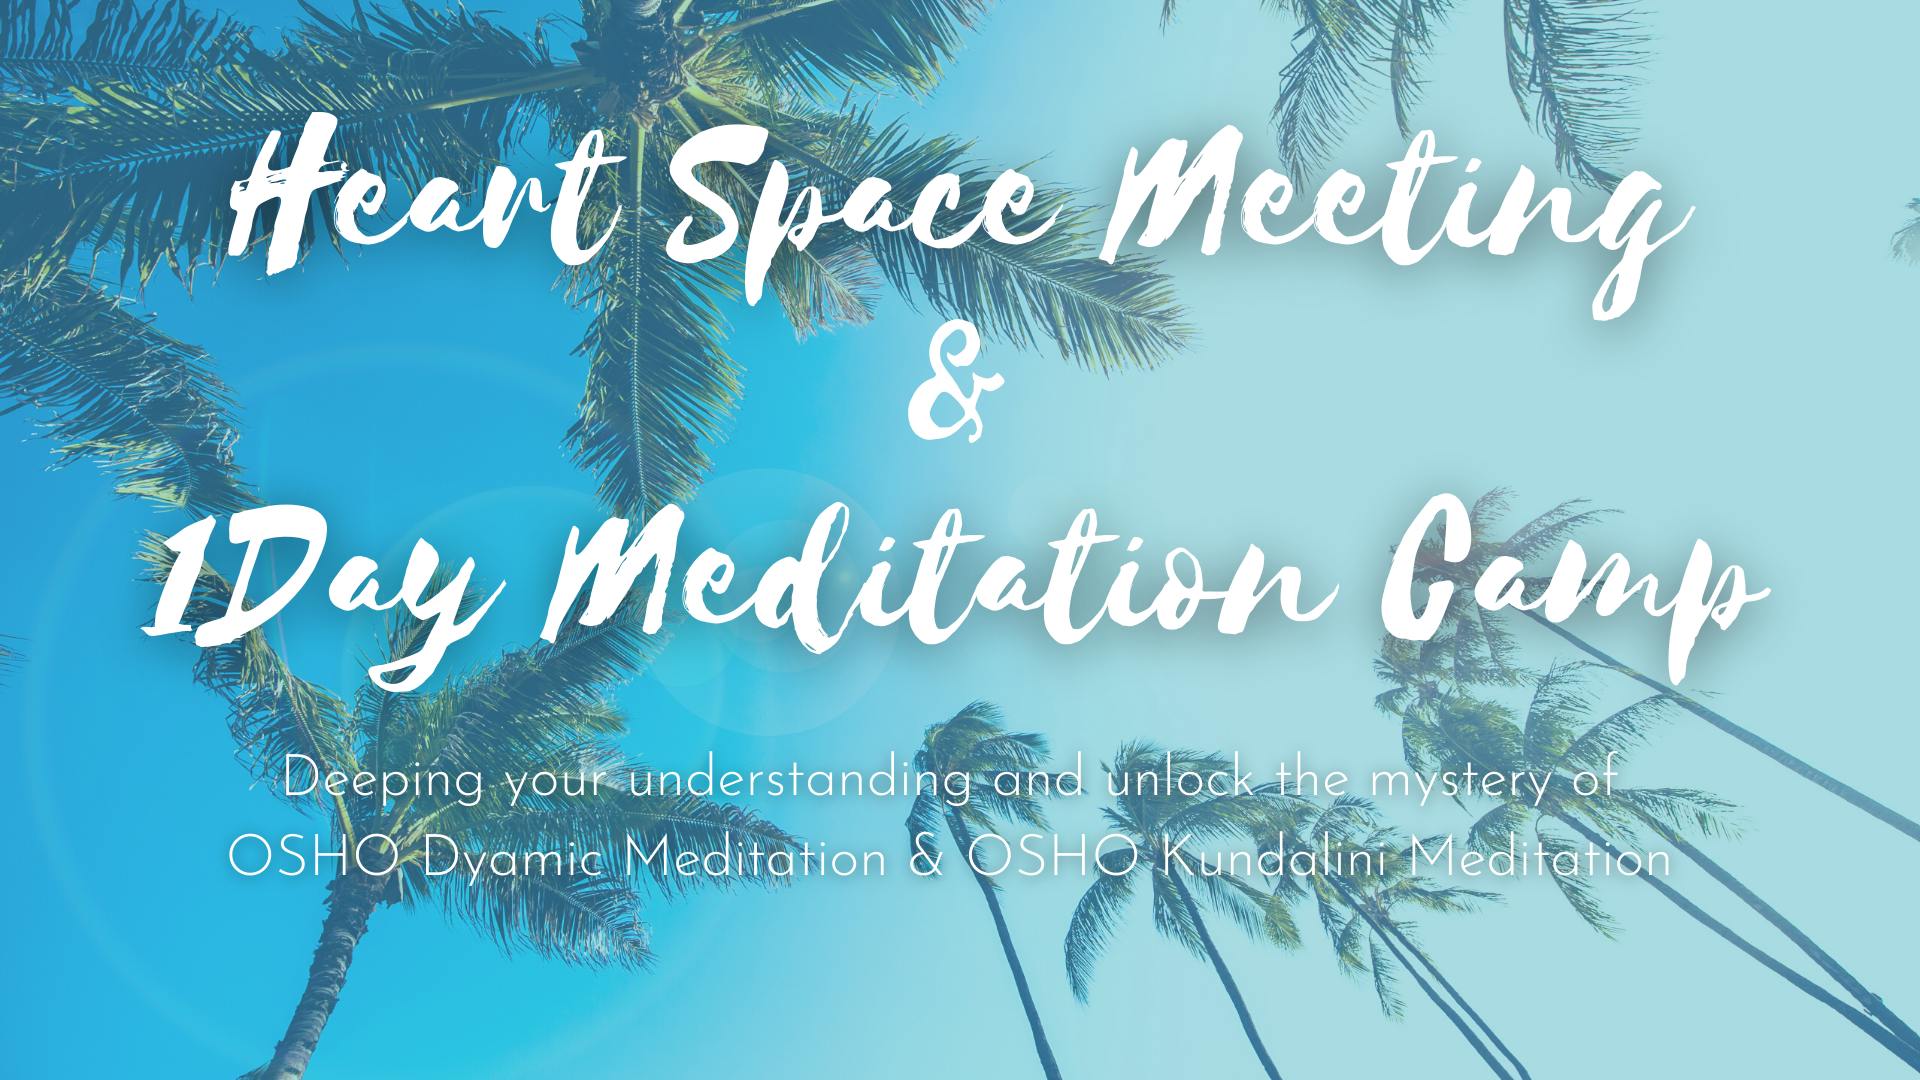 6/25&26 HSM & Meditation Camp